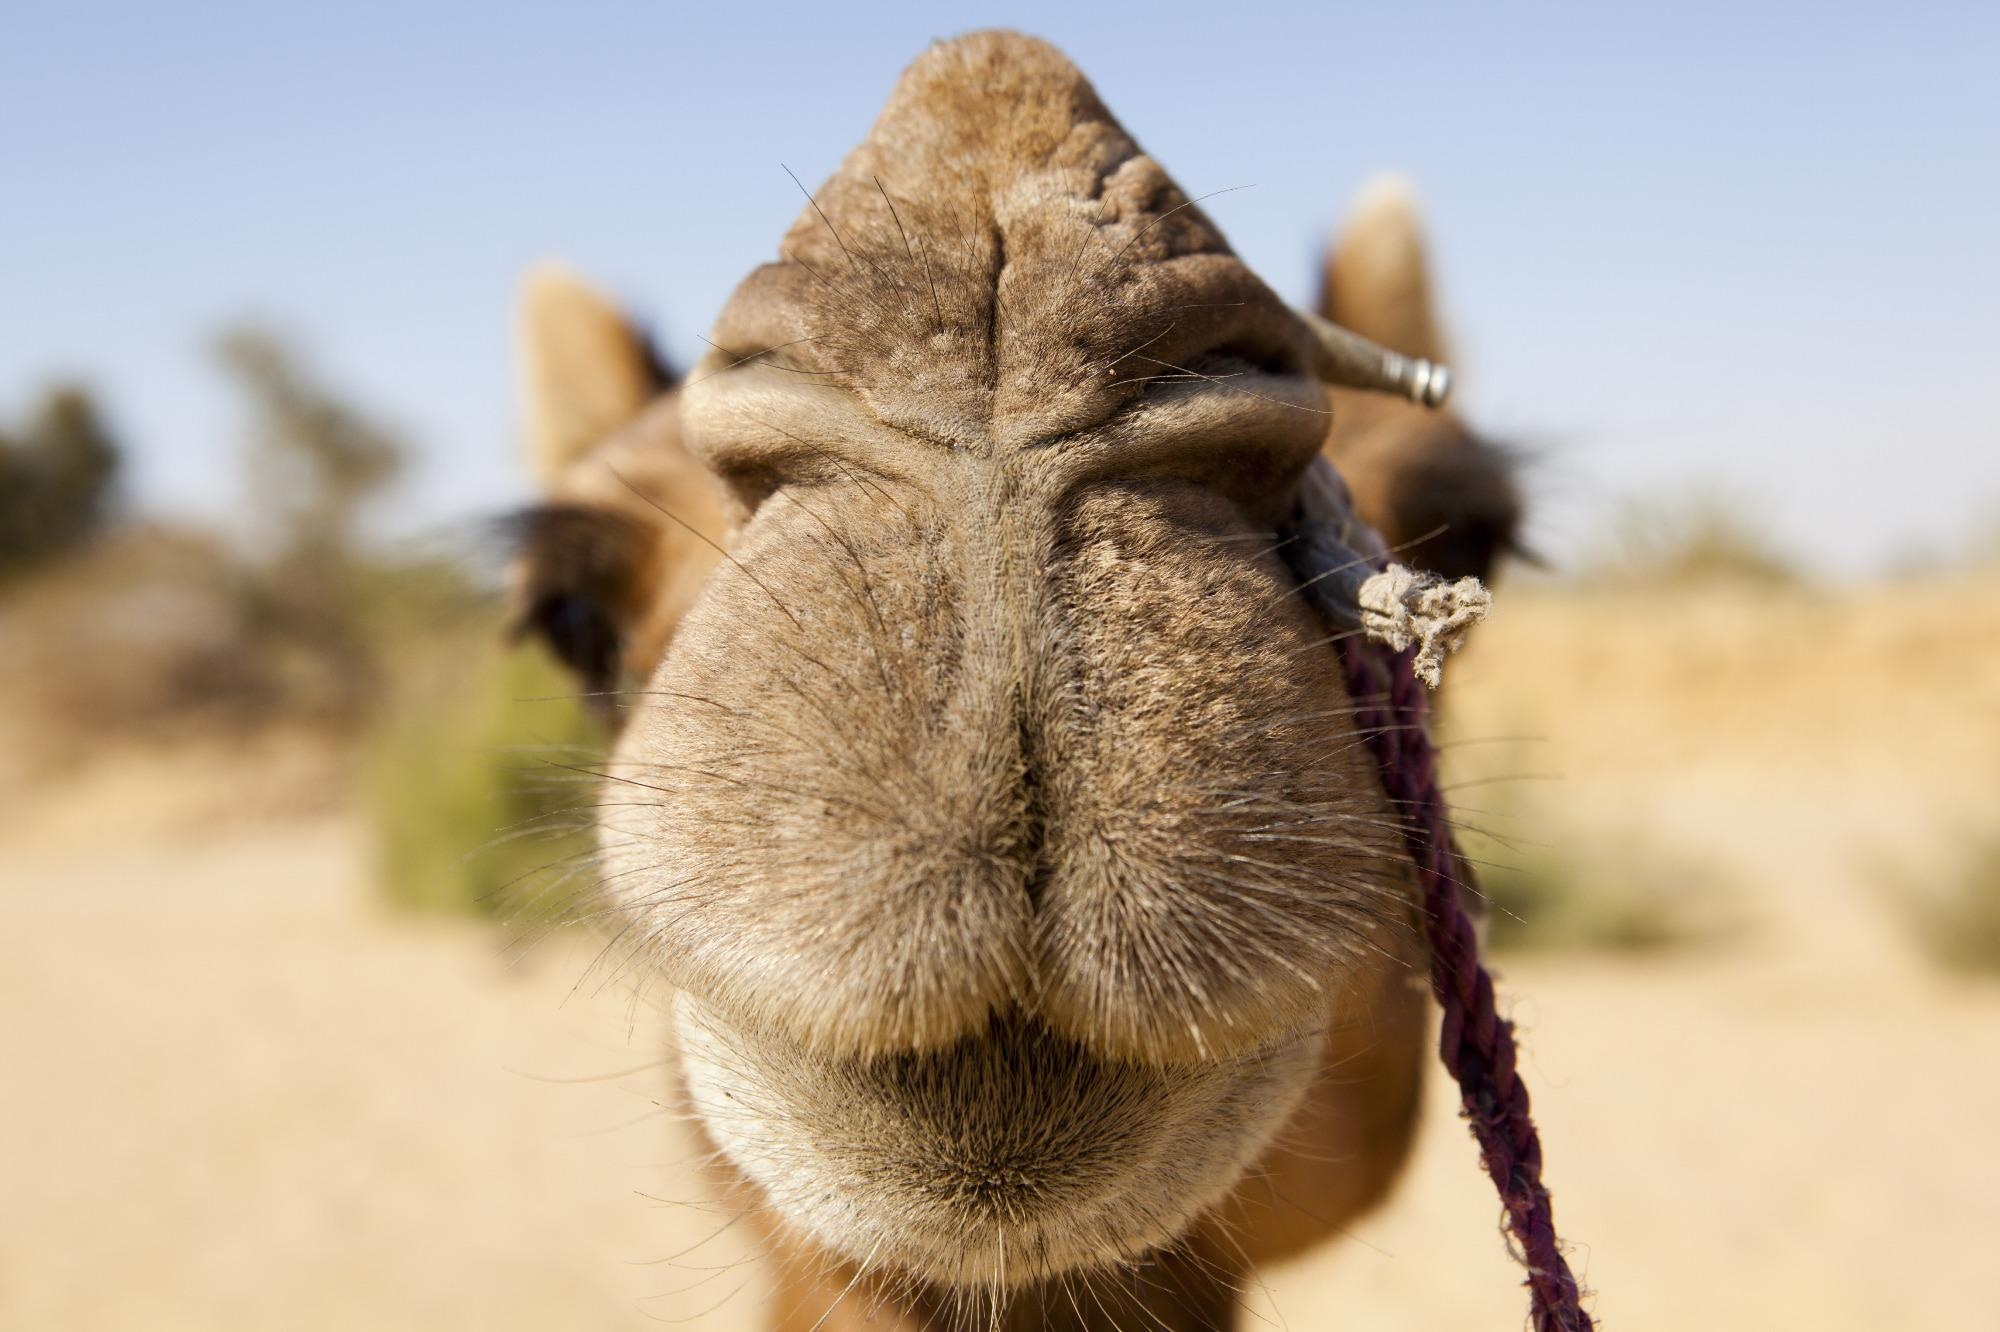 Novel Humidity Sensor Draws Inspiration from a Camel’s Nose